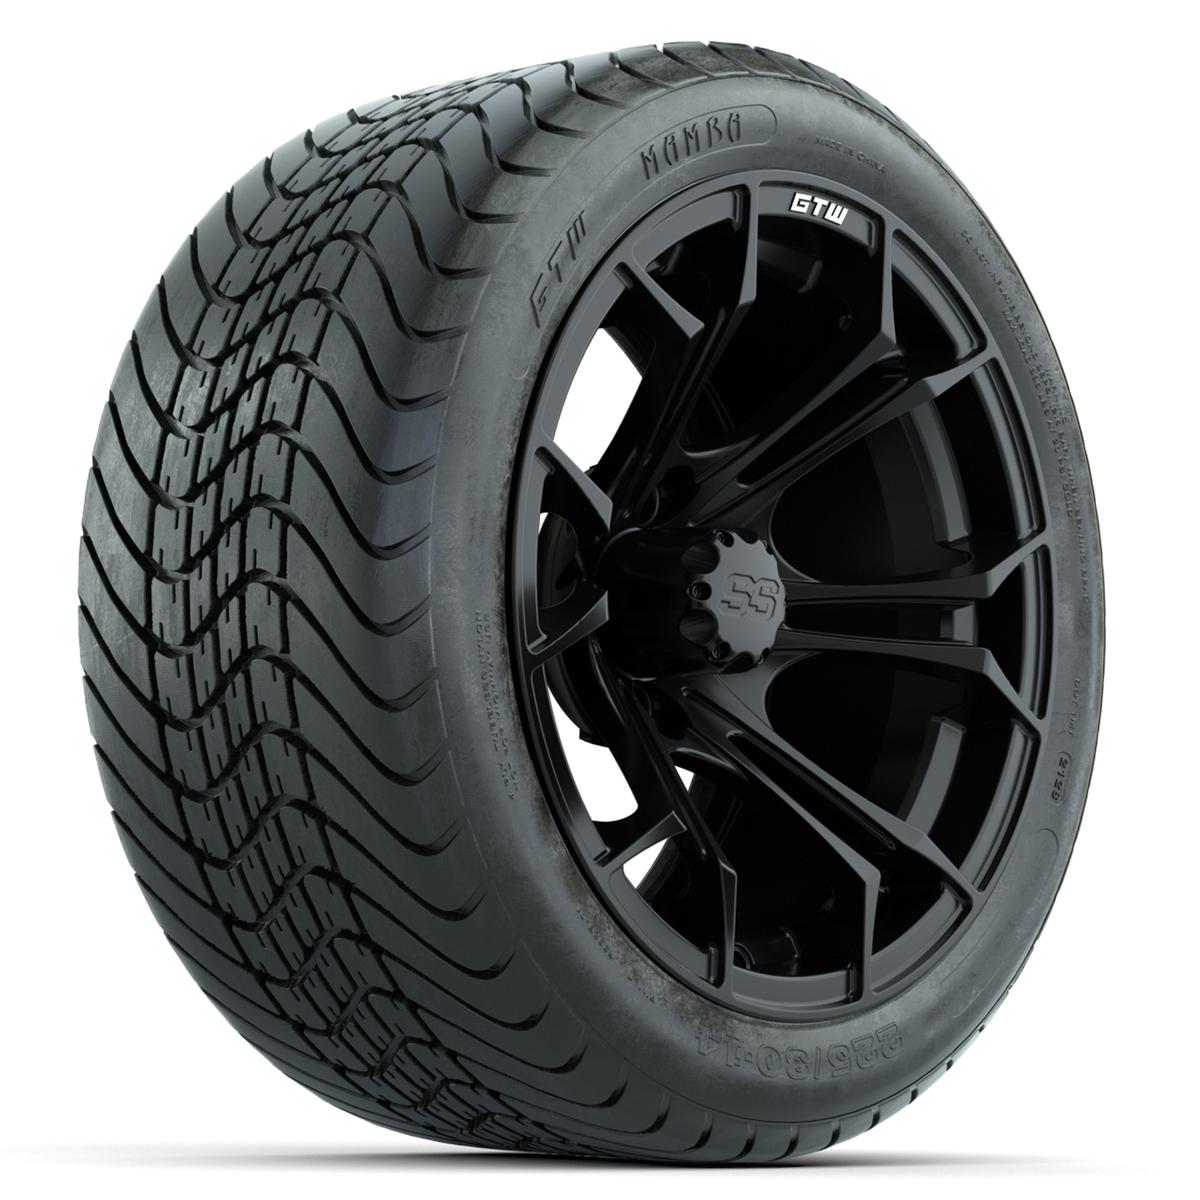 GTW Spyder Matte Black 14 in Wheels with 225/30-14 Mamba Street Tires – Full Set